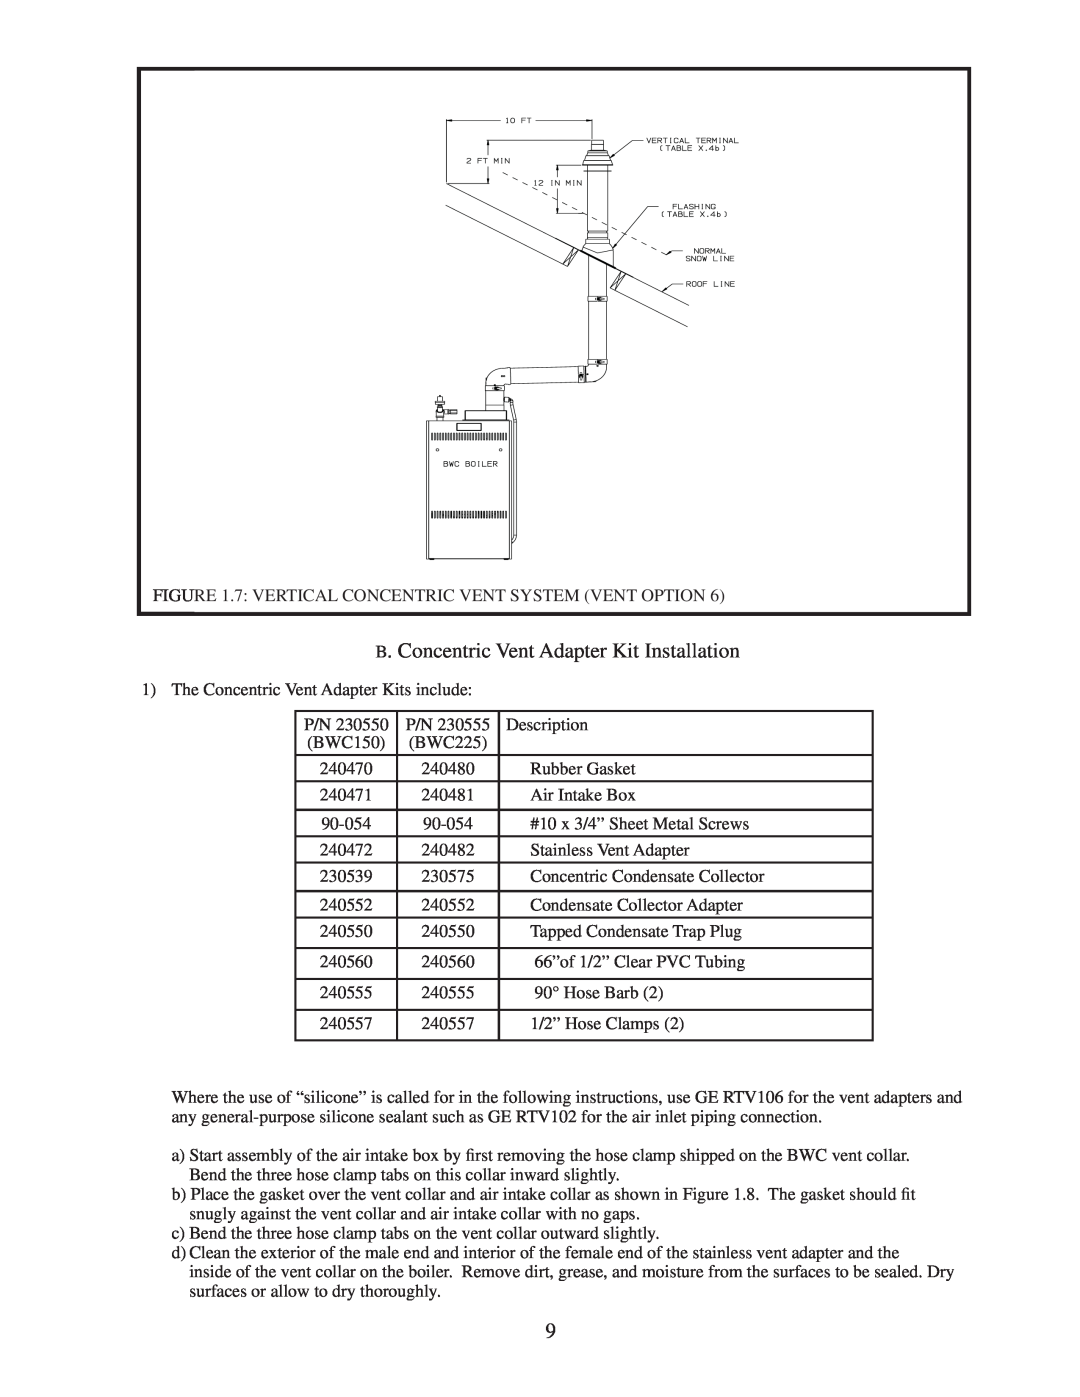 Crown Boiler M600 B. Concentric Vent Adapter Kit Installation, 7 VERTICAL CONCENTRIC VENT SYSTEM VENT OPTION, Description 